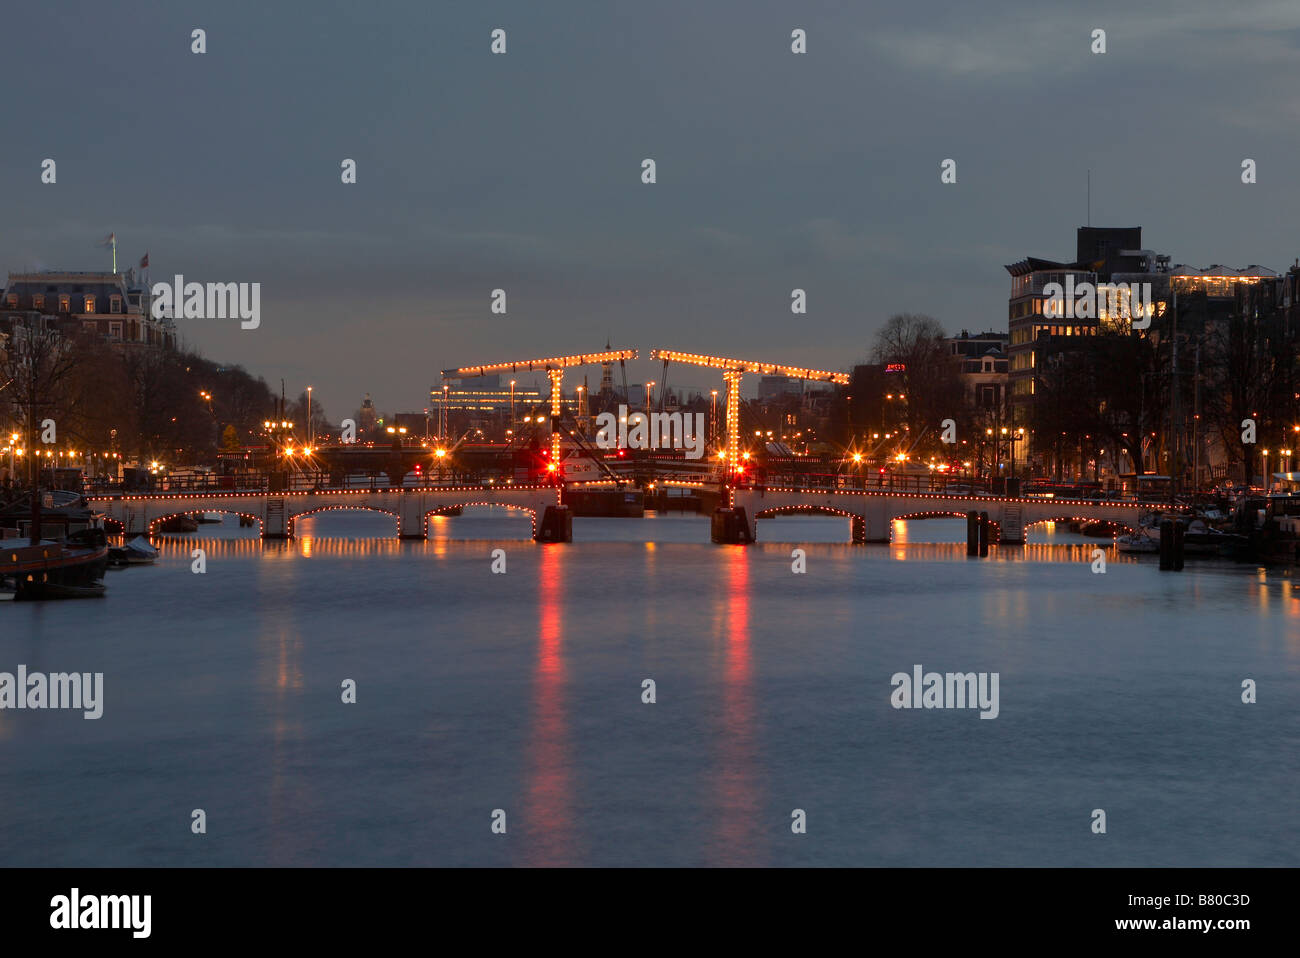 Magere Brug (Skinny Bridge) over the Amstel, Amsterdam, Netherlands Stock Photo